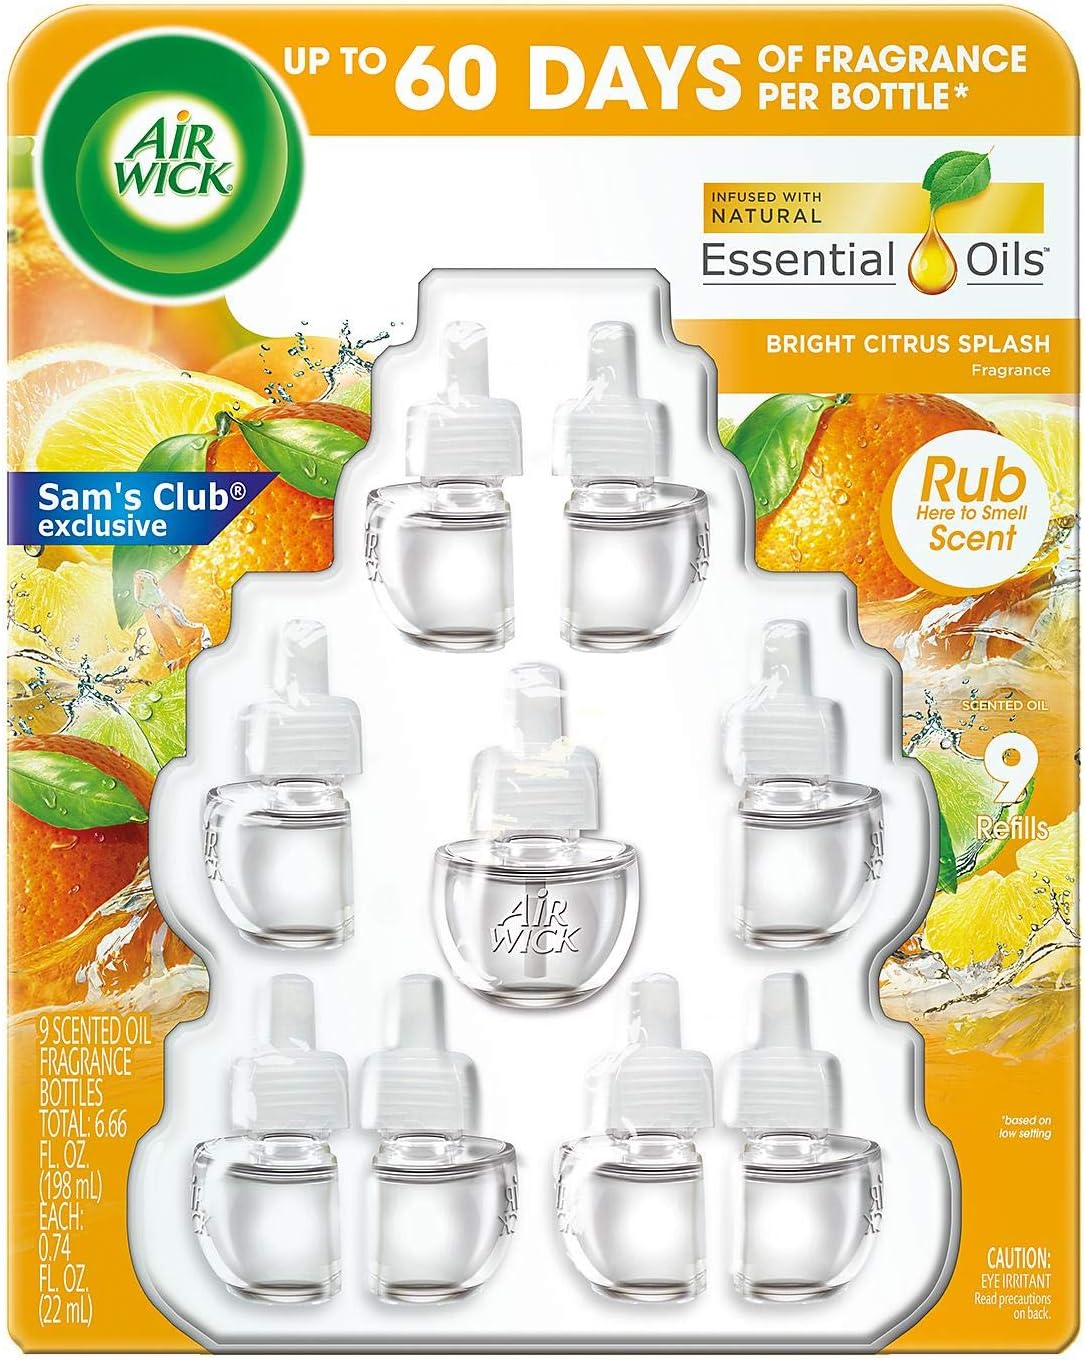 Air Wick Bright Citrus Splash Natural Essential Oils, 9 Fragrance Bottles